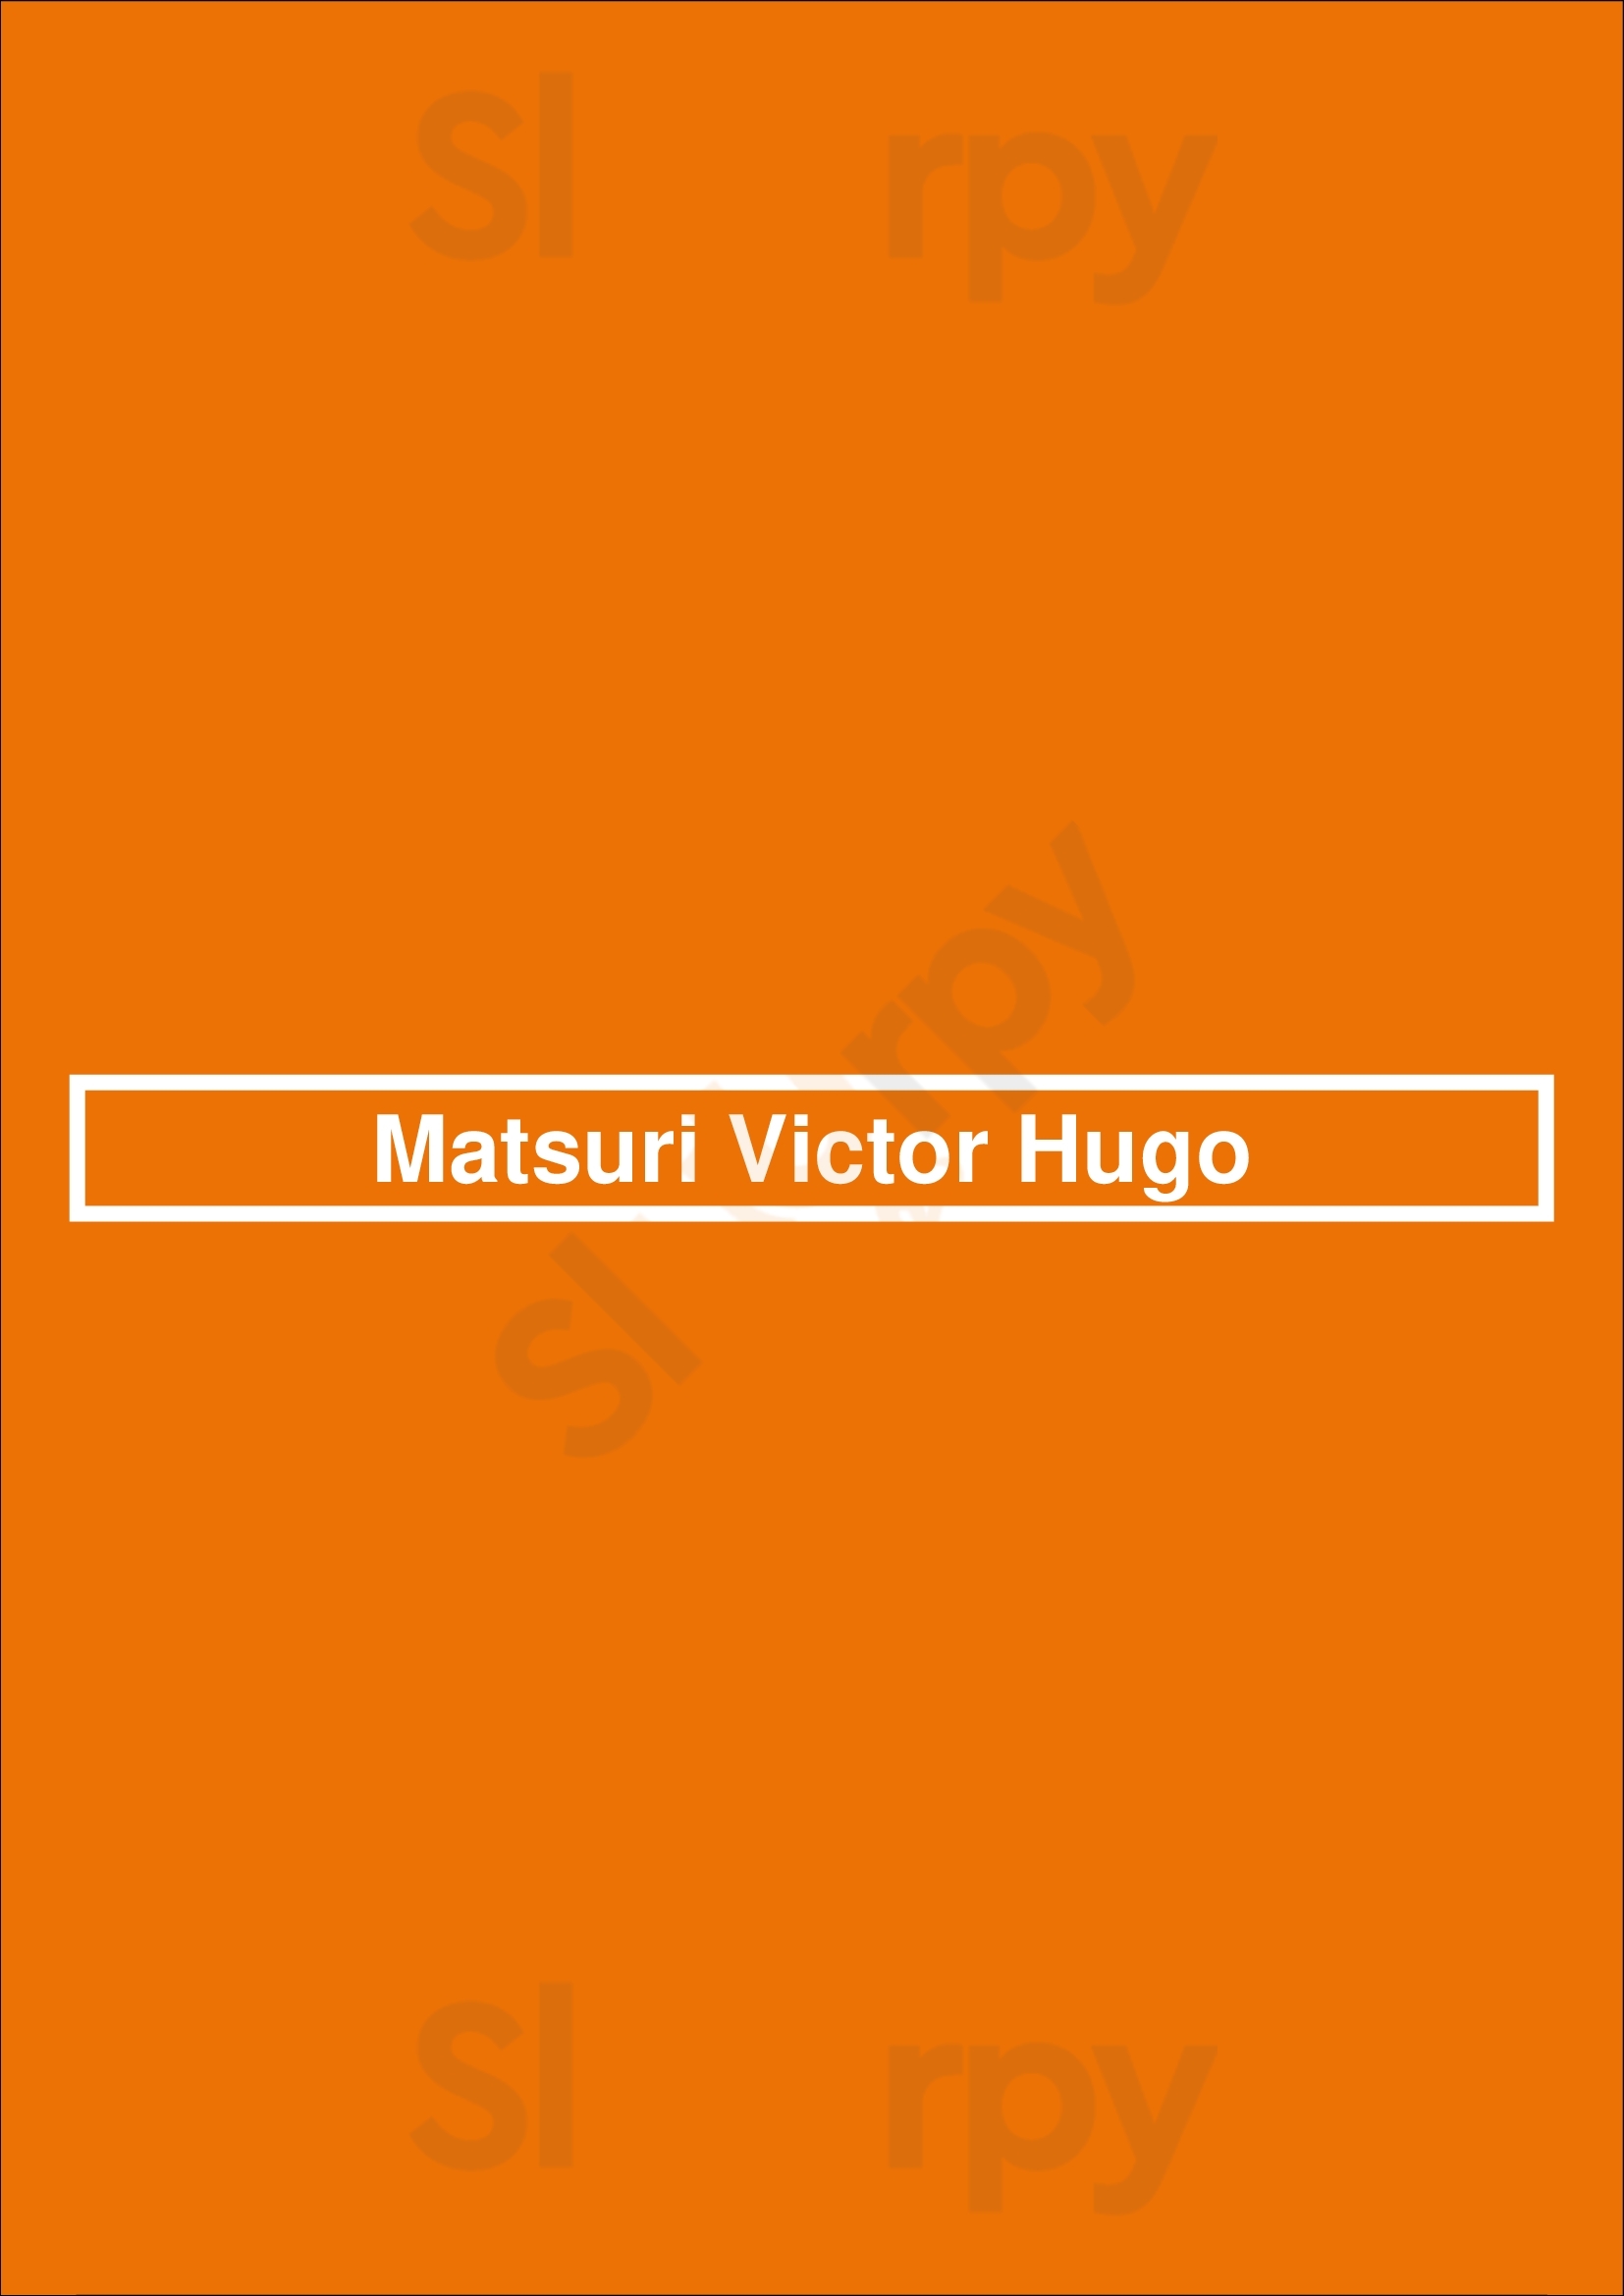 Matsuri Victor Hugo Paris Menu - 1